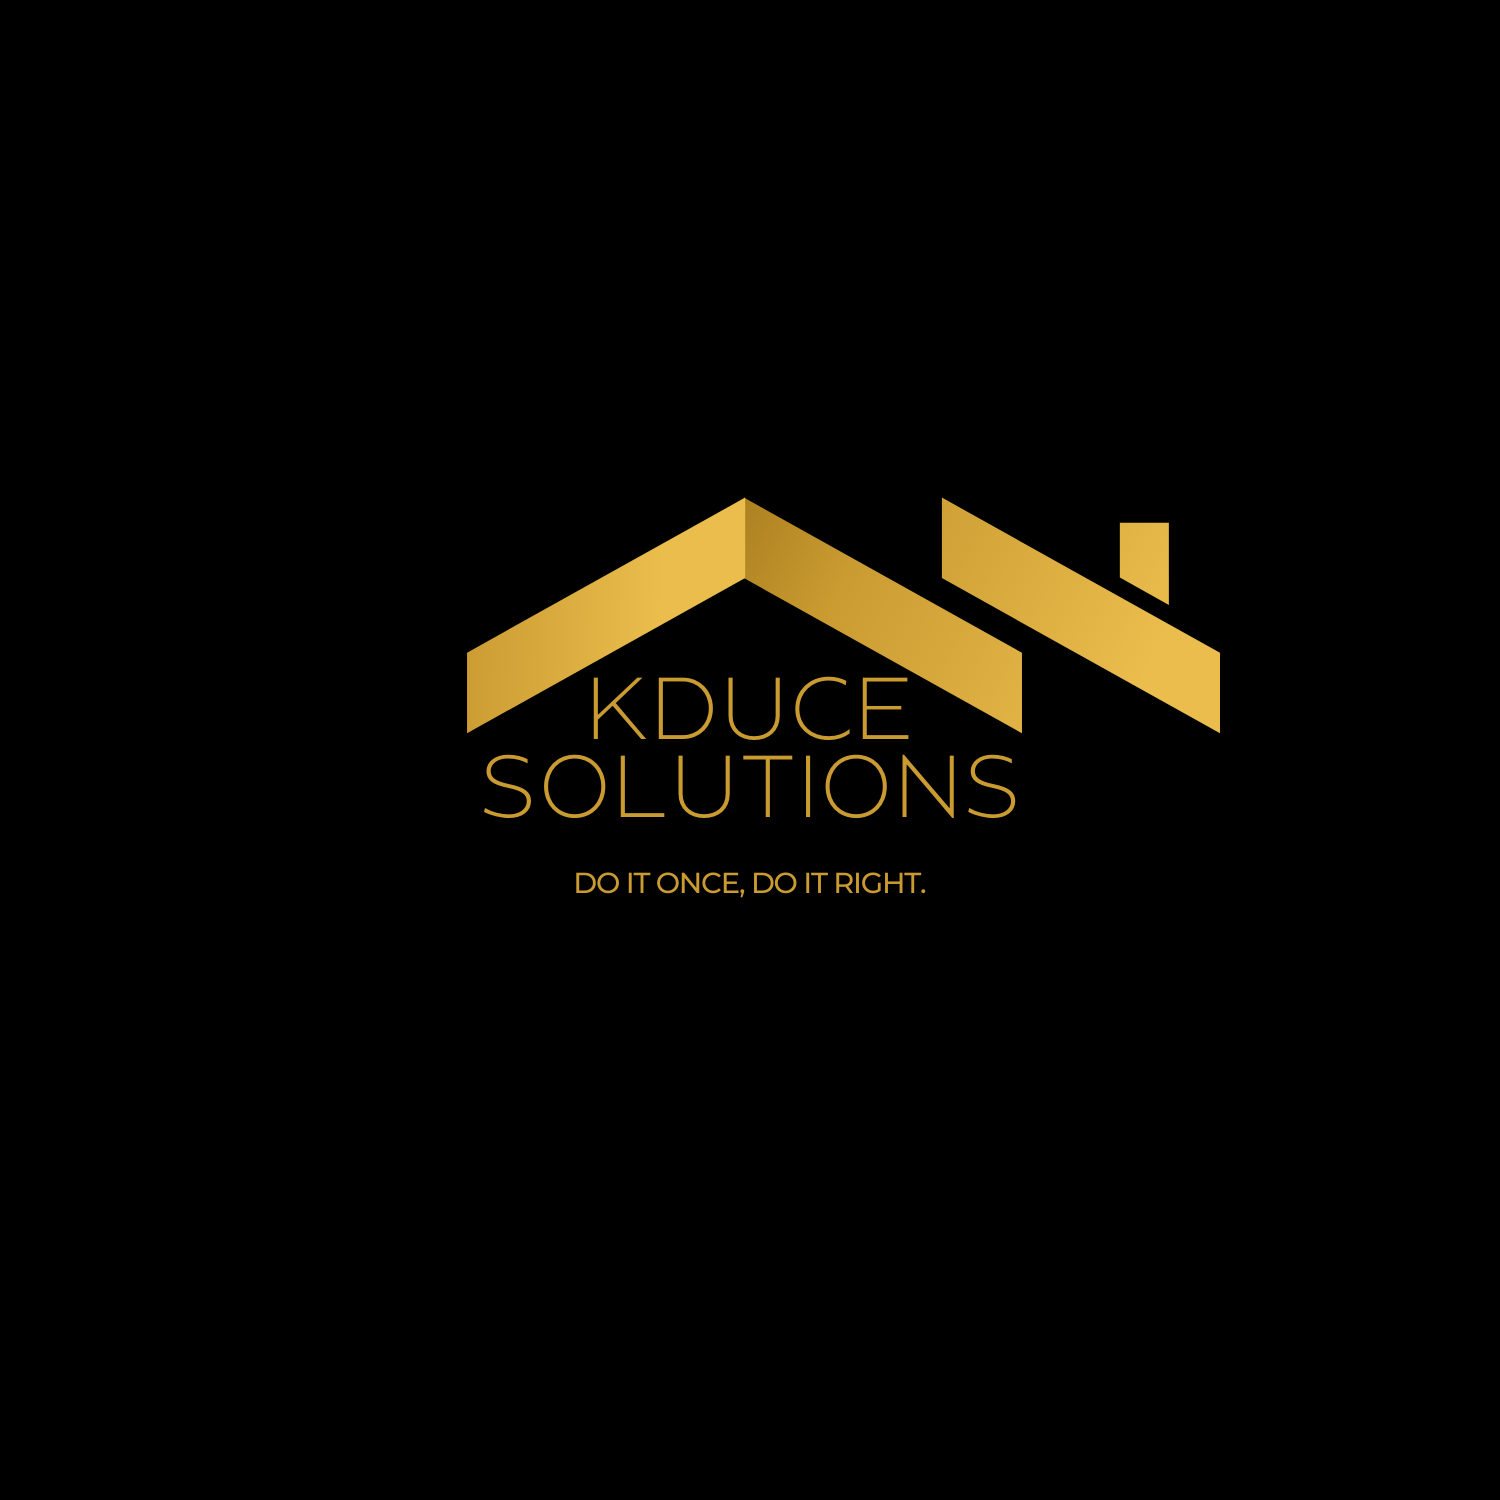 KDuce Solutions Logo